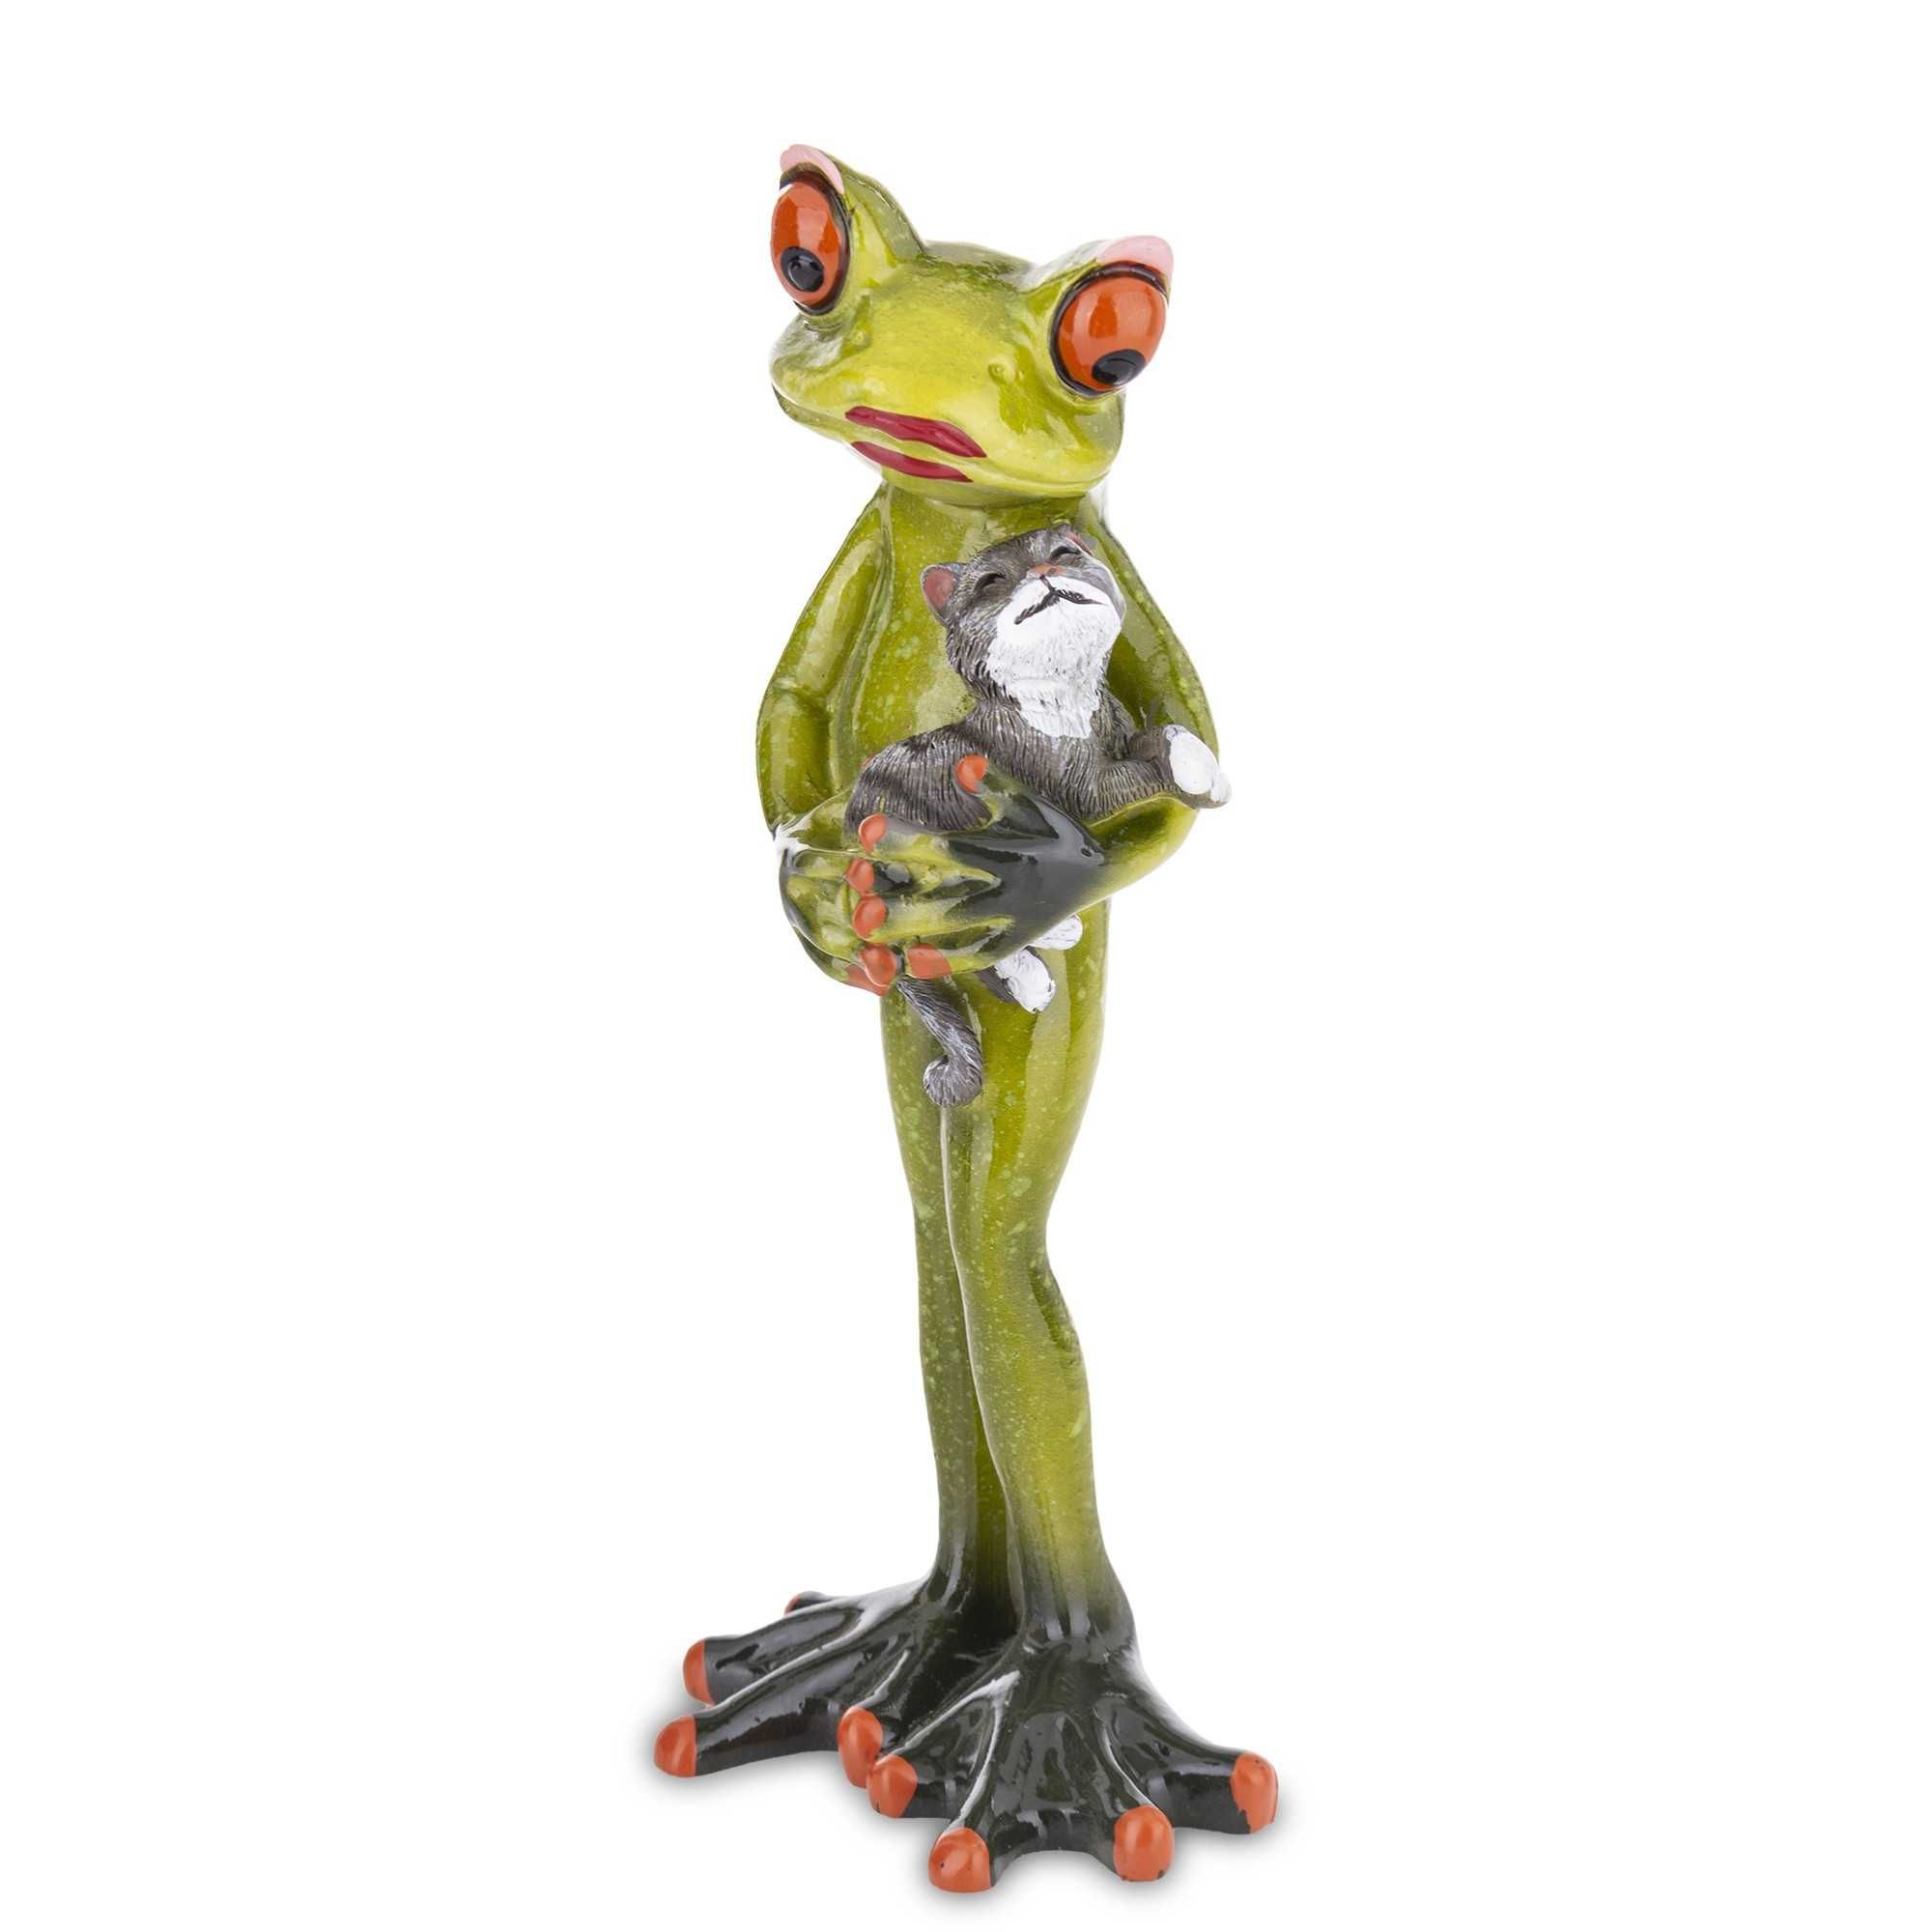 Figurka żaba żabka zielona kobieta kot